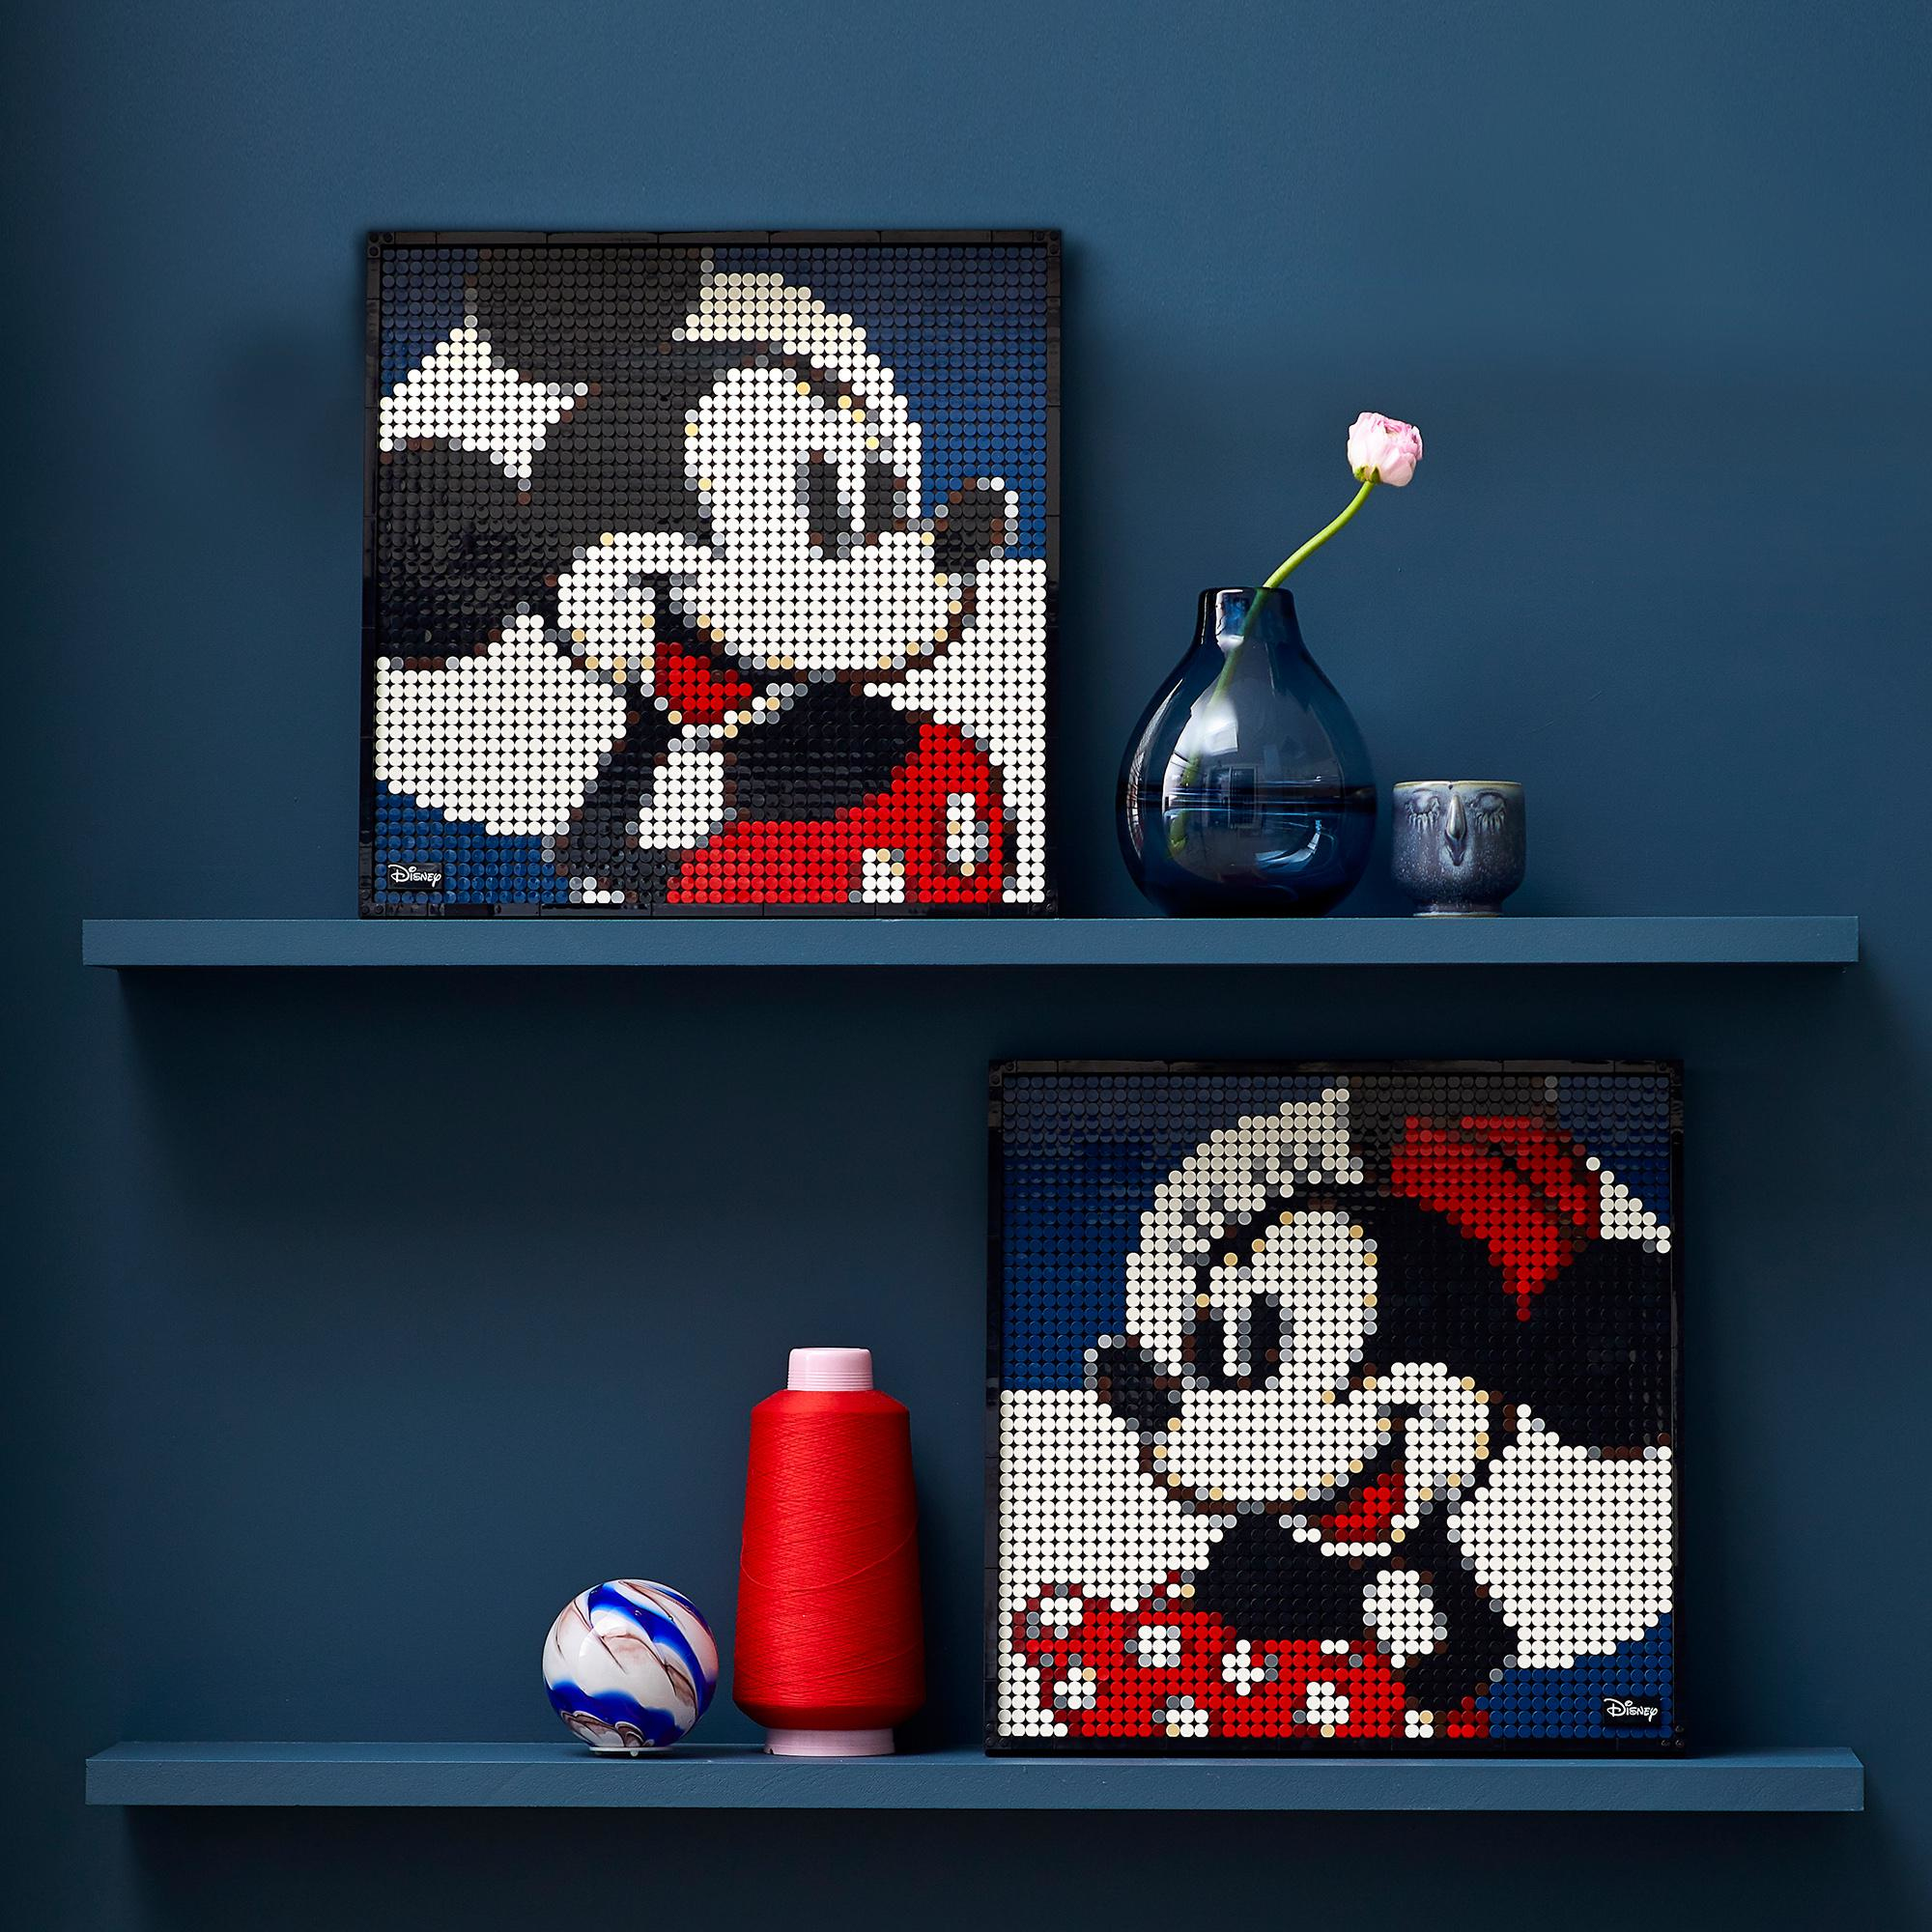 LEGO ART Disney's Mickey Mouse